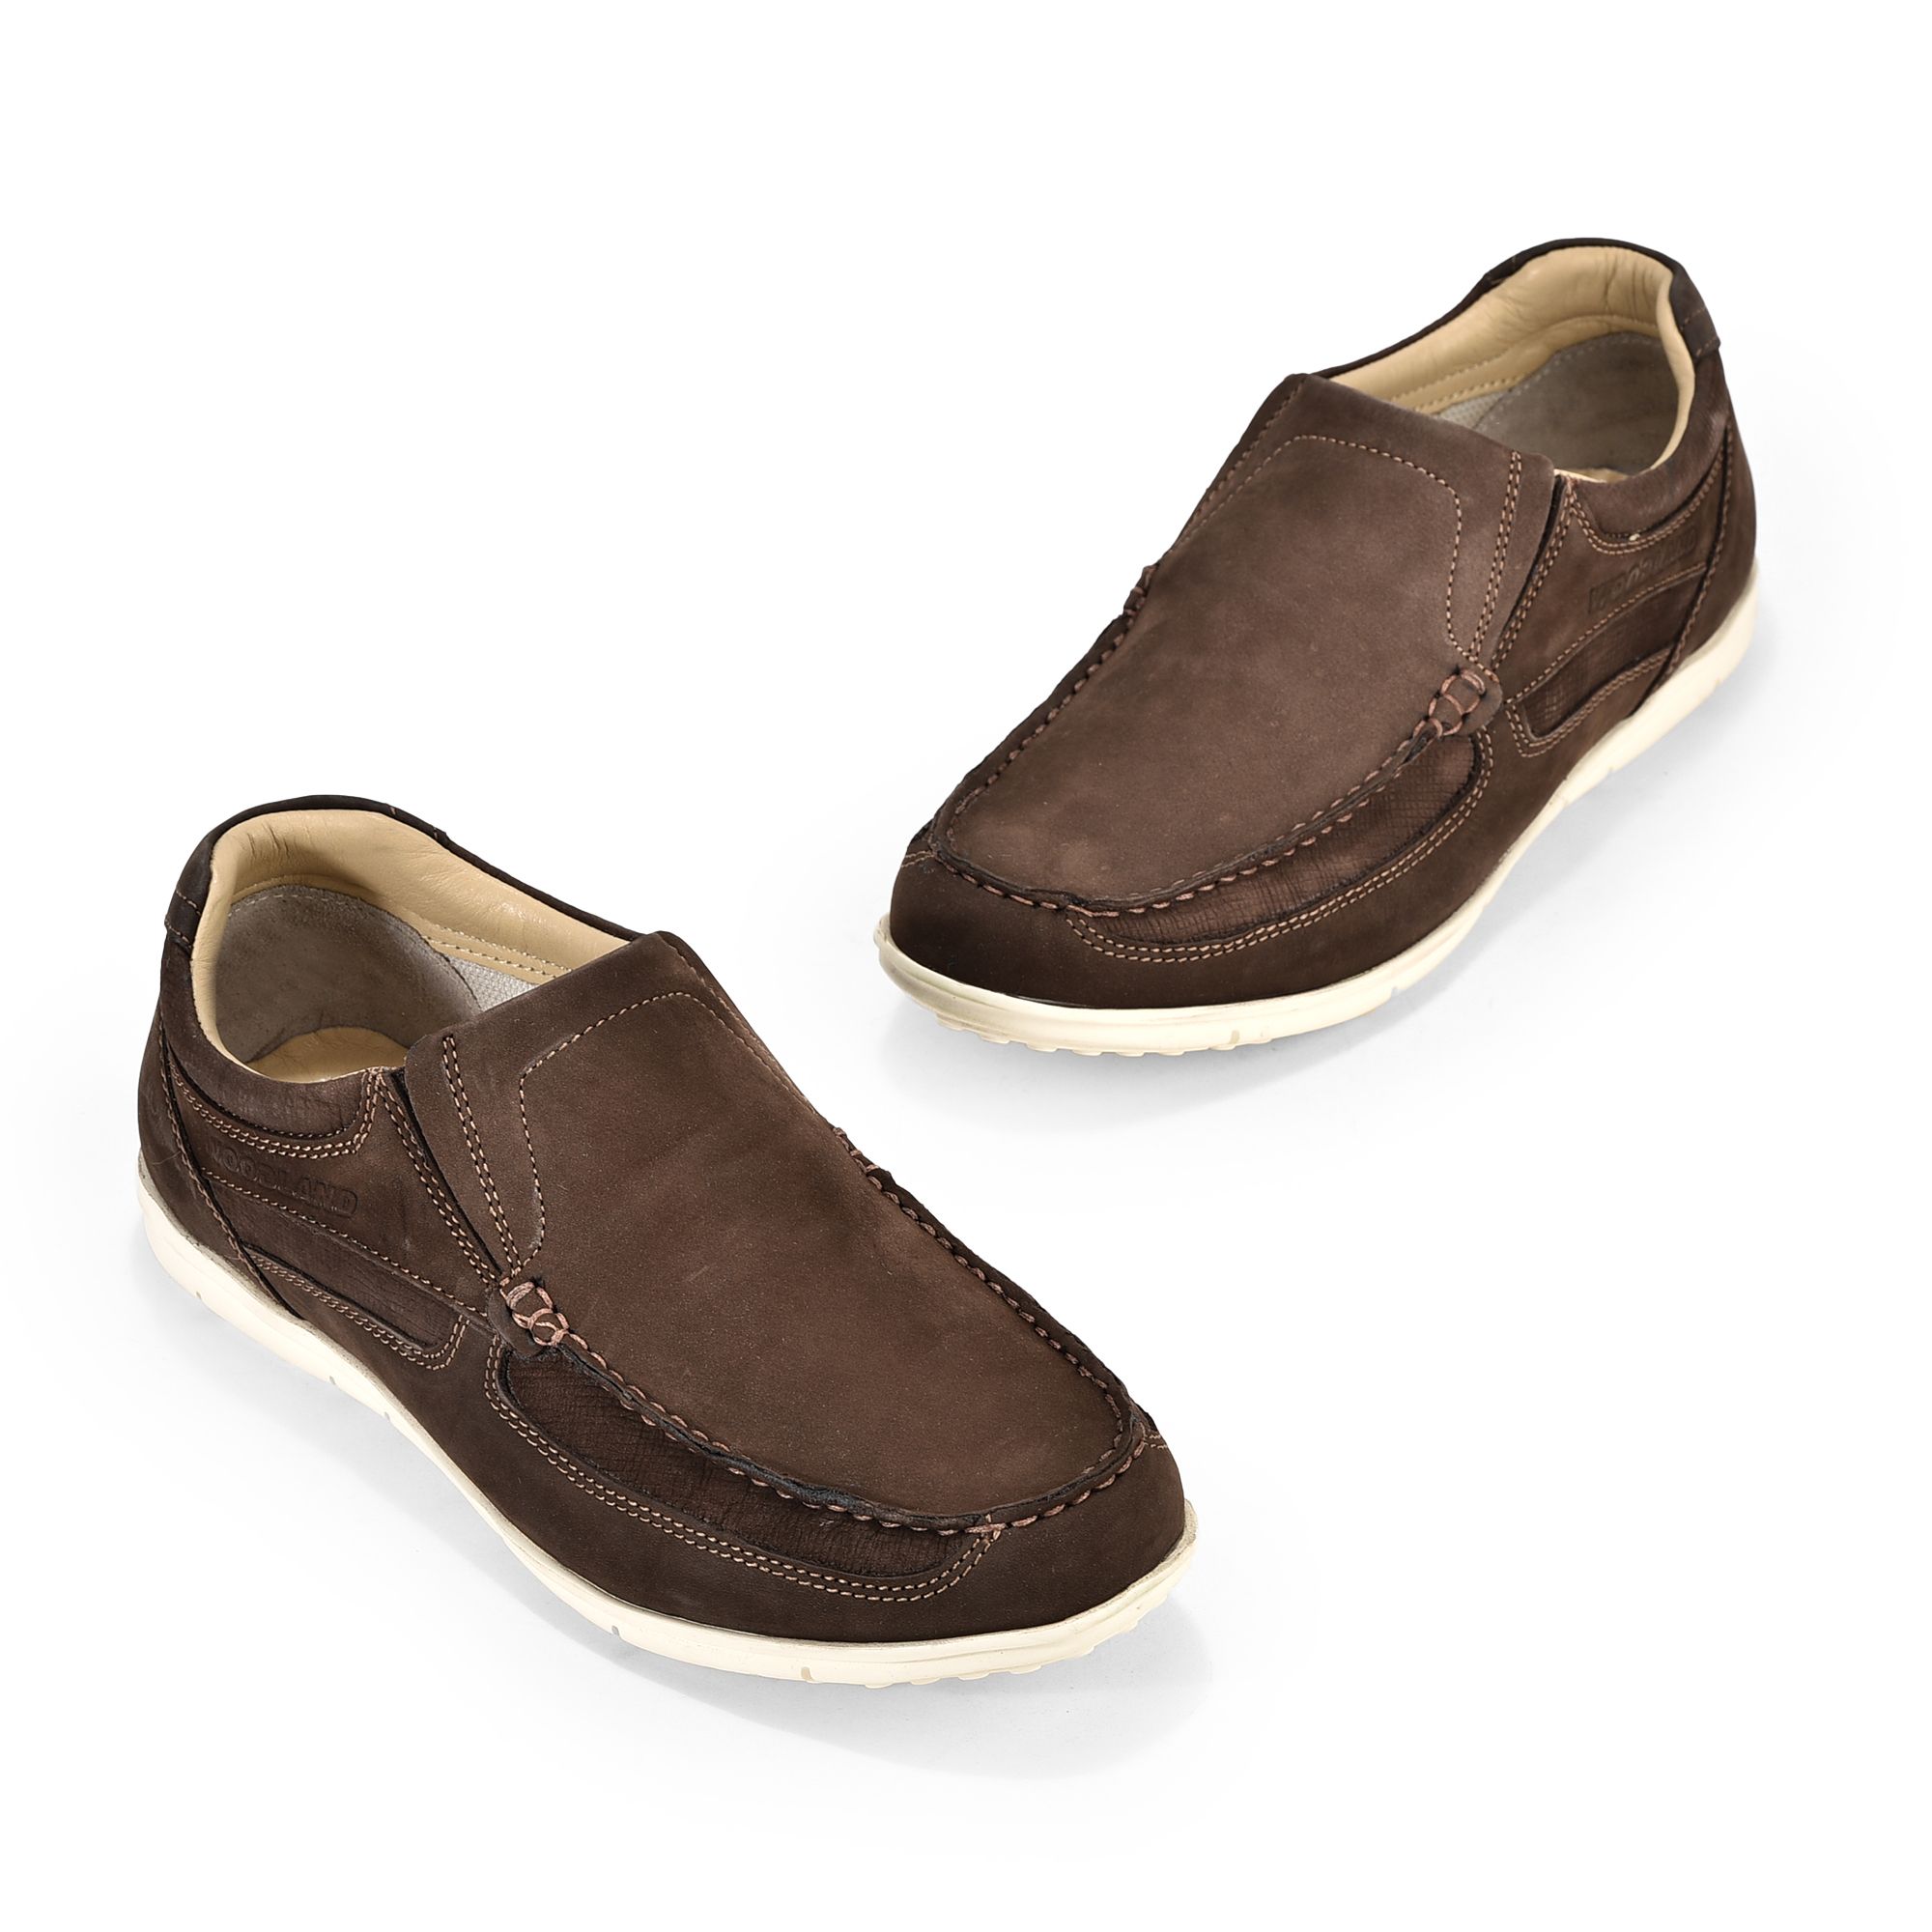 Brown slip-on shoe